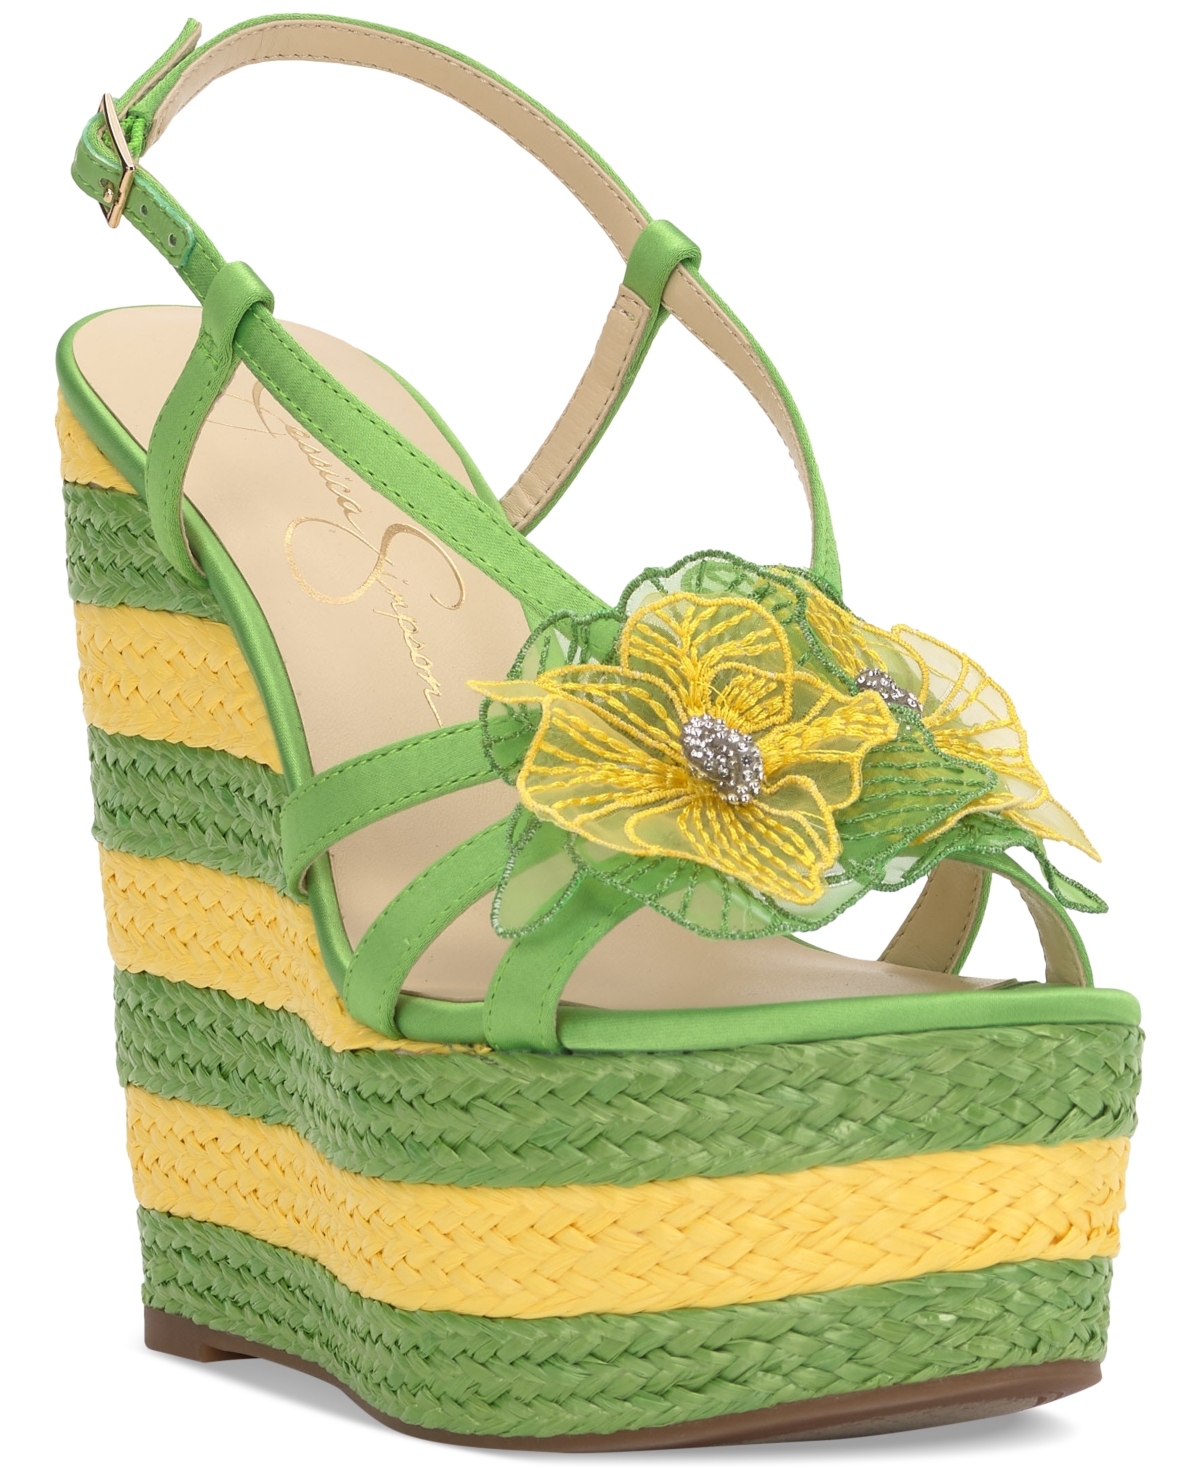 Visela Flower Detail Platform Espadrille Wedge Sandals - Bright Green Satin